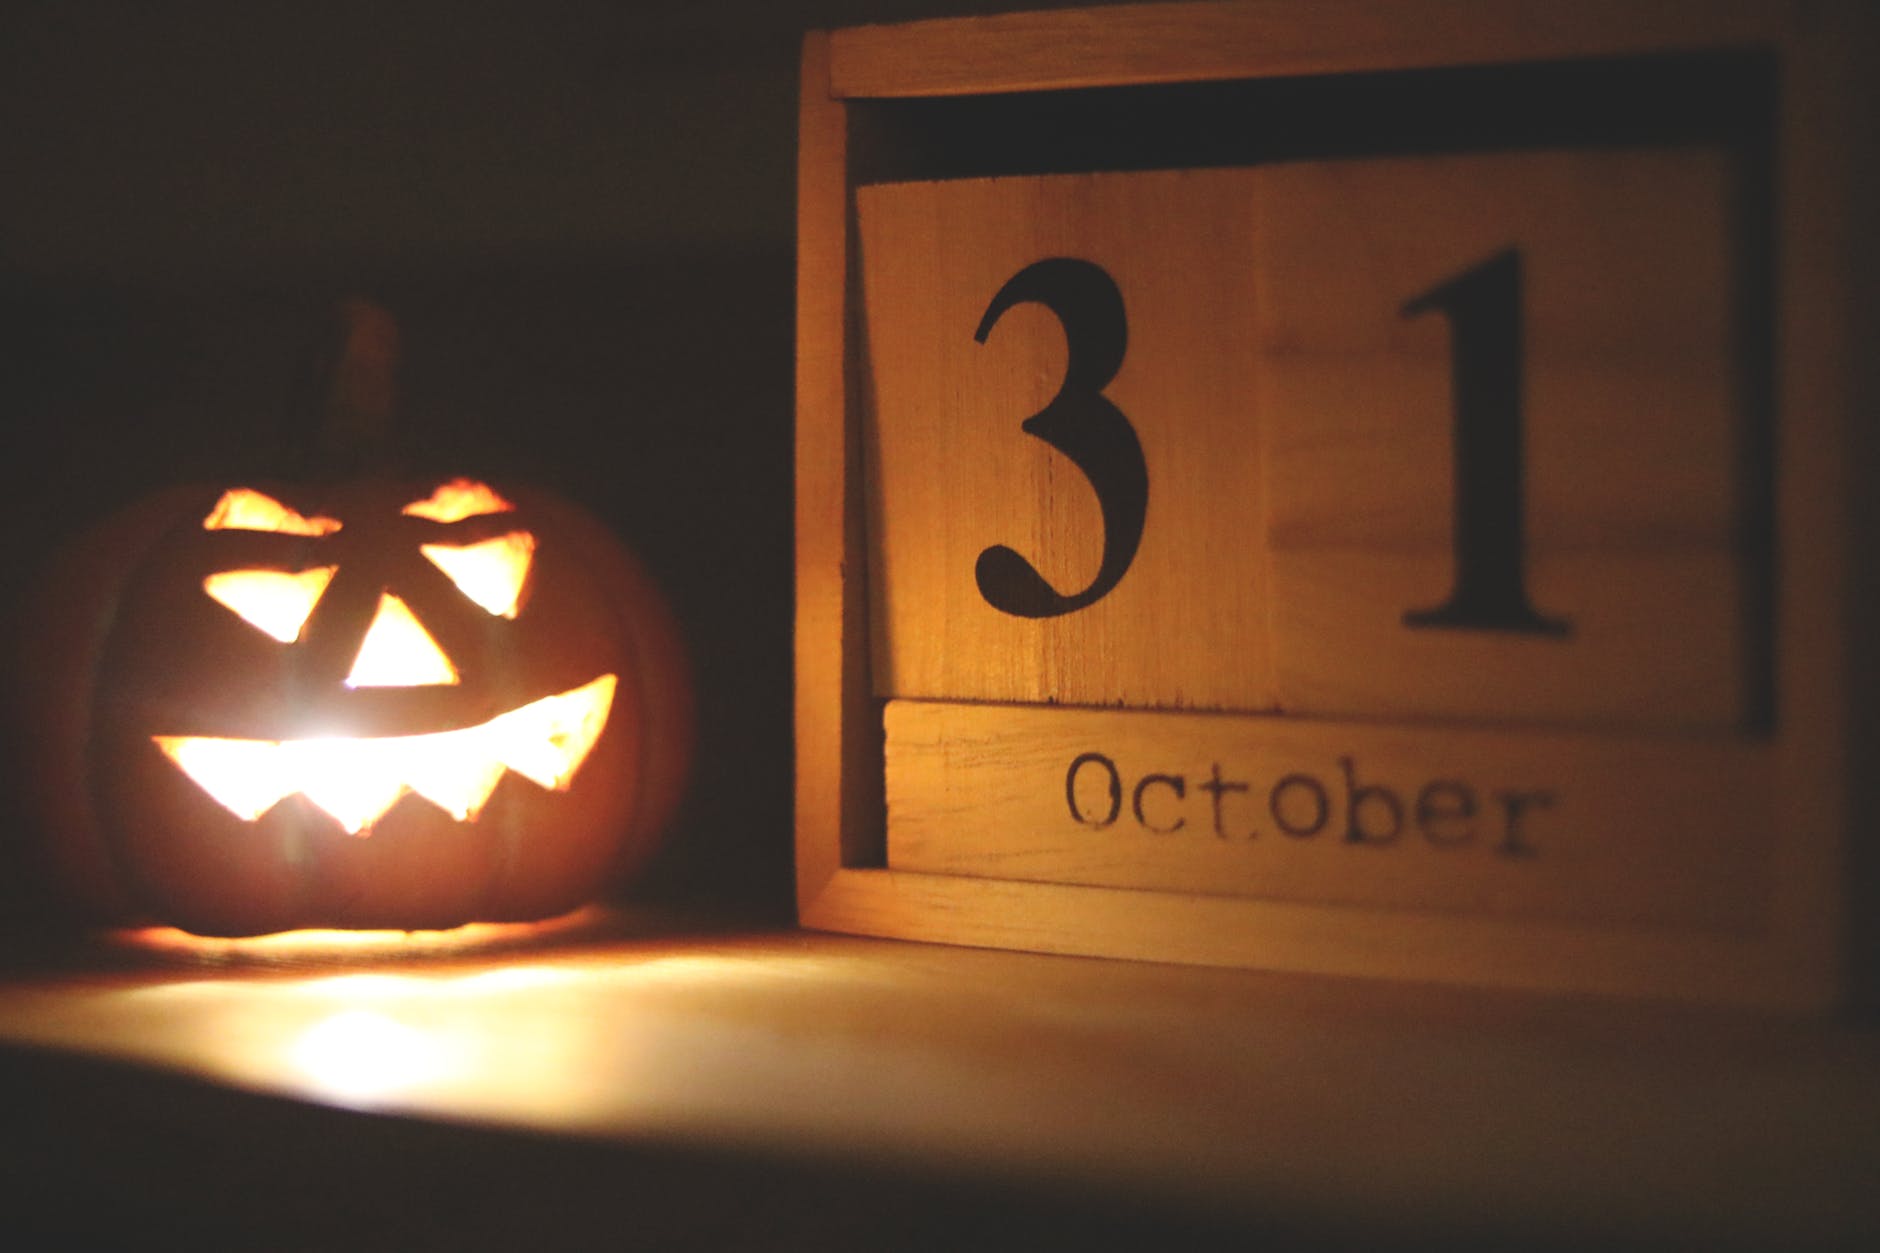 a small lit jack-o-lantern next to a block calendar reading "31 October"